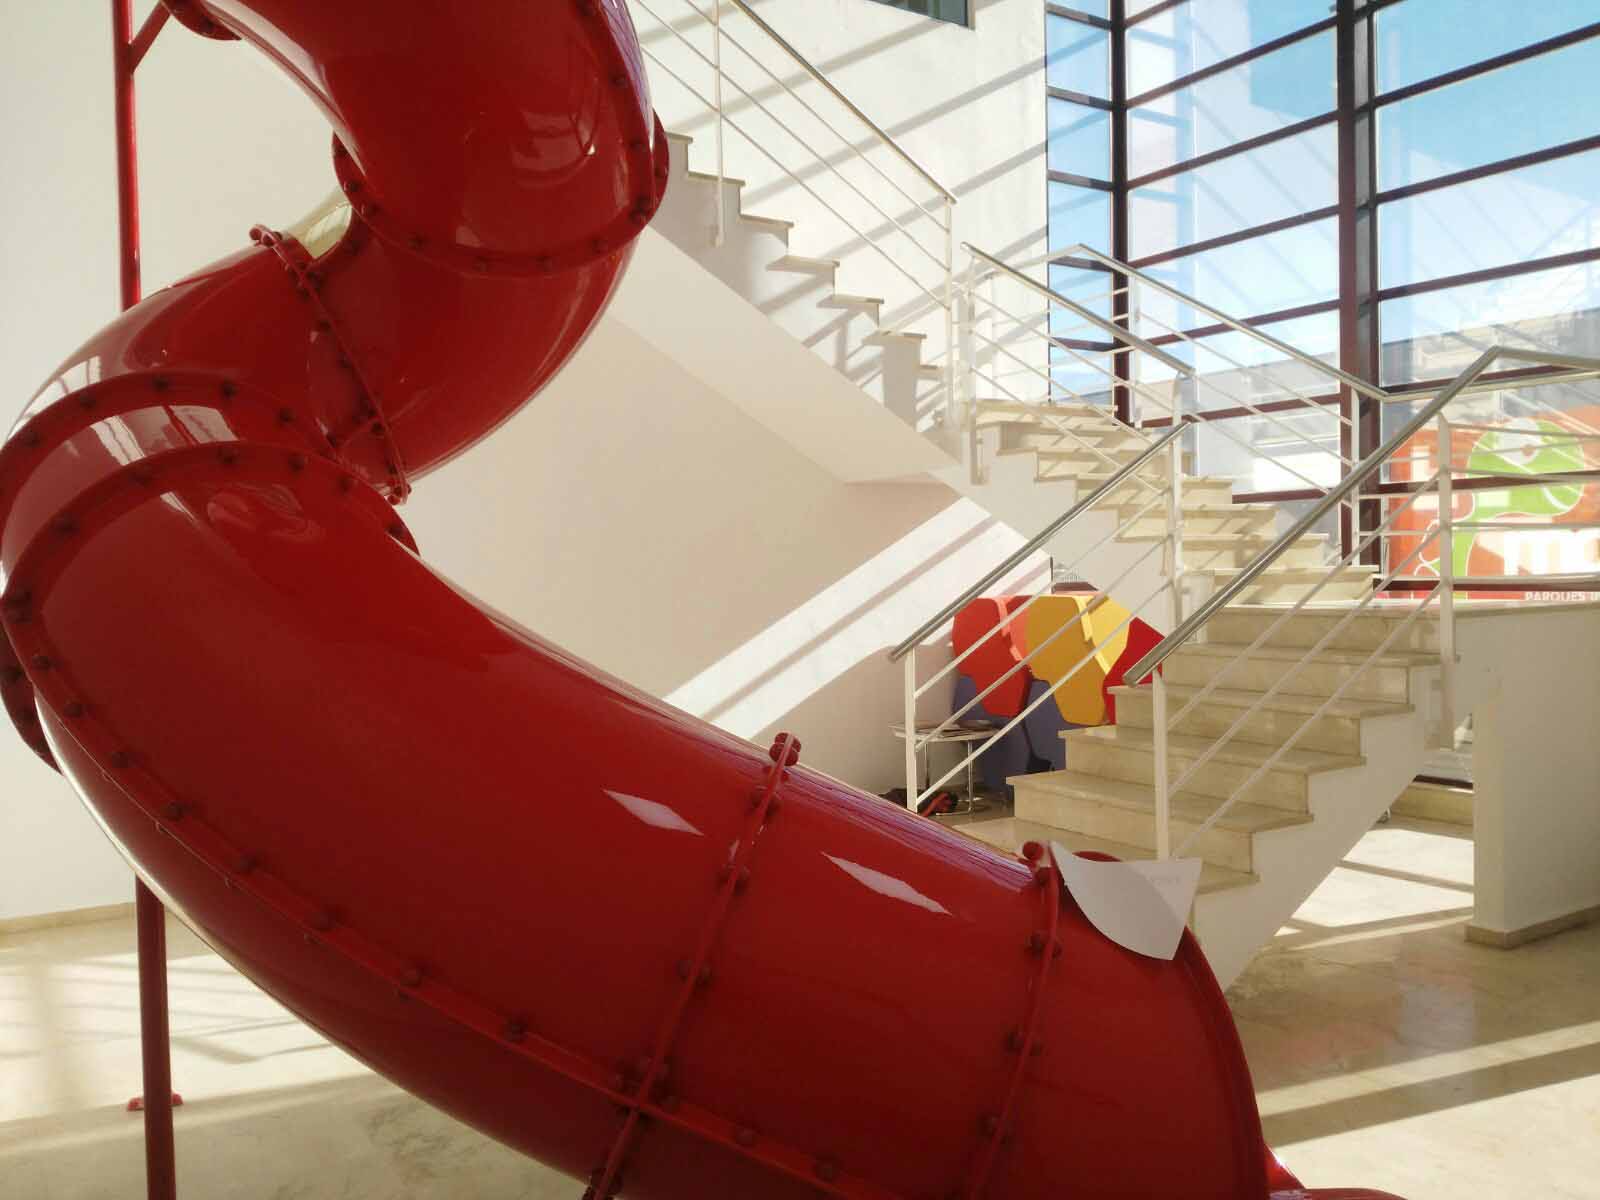 red helical slide inside of a building